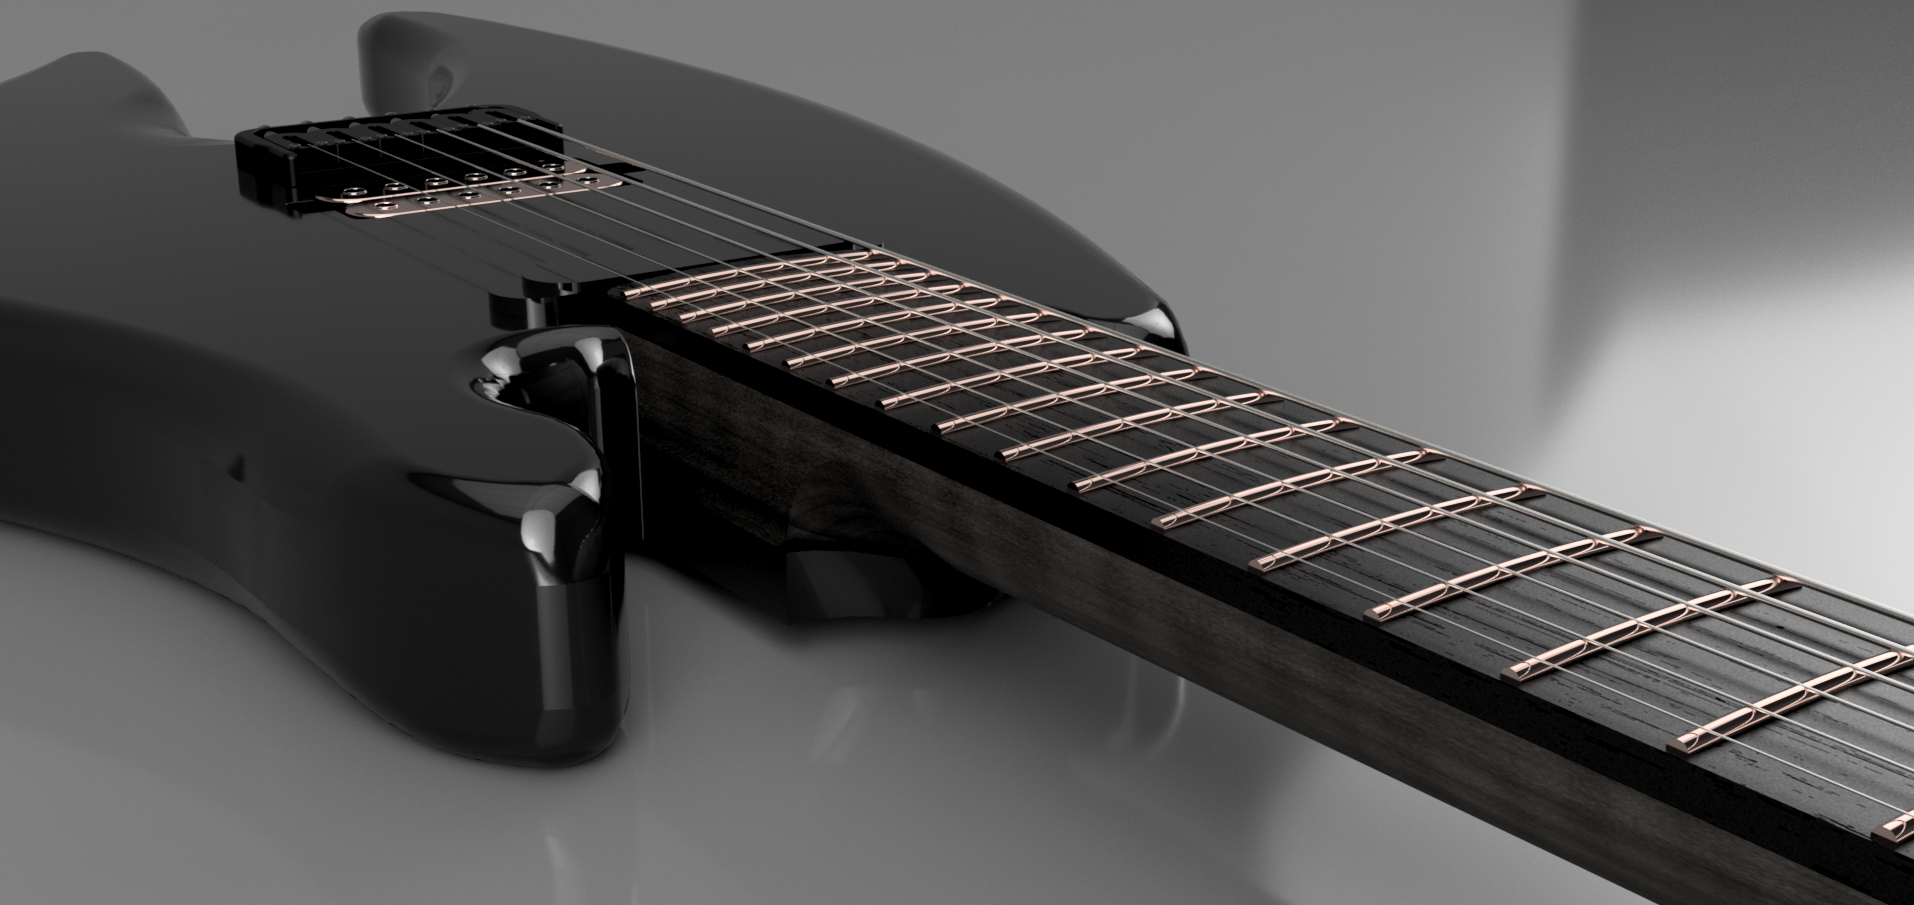 Anzuik guitar in black